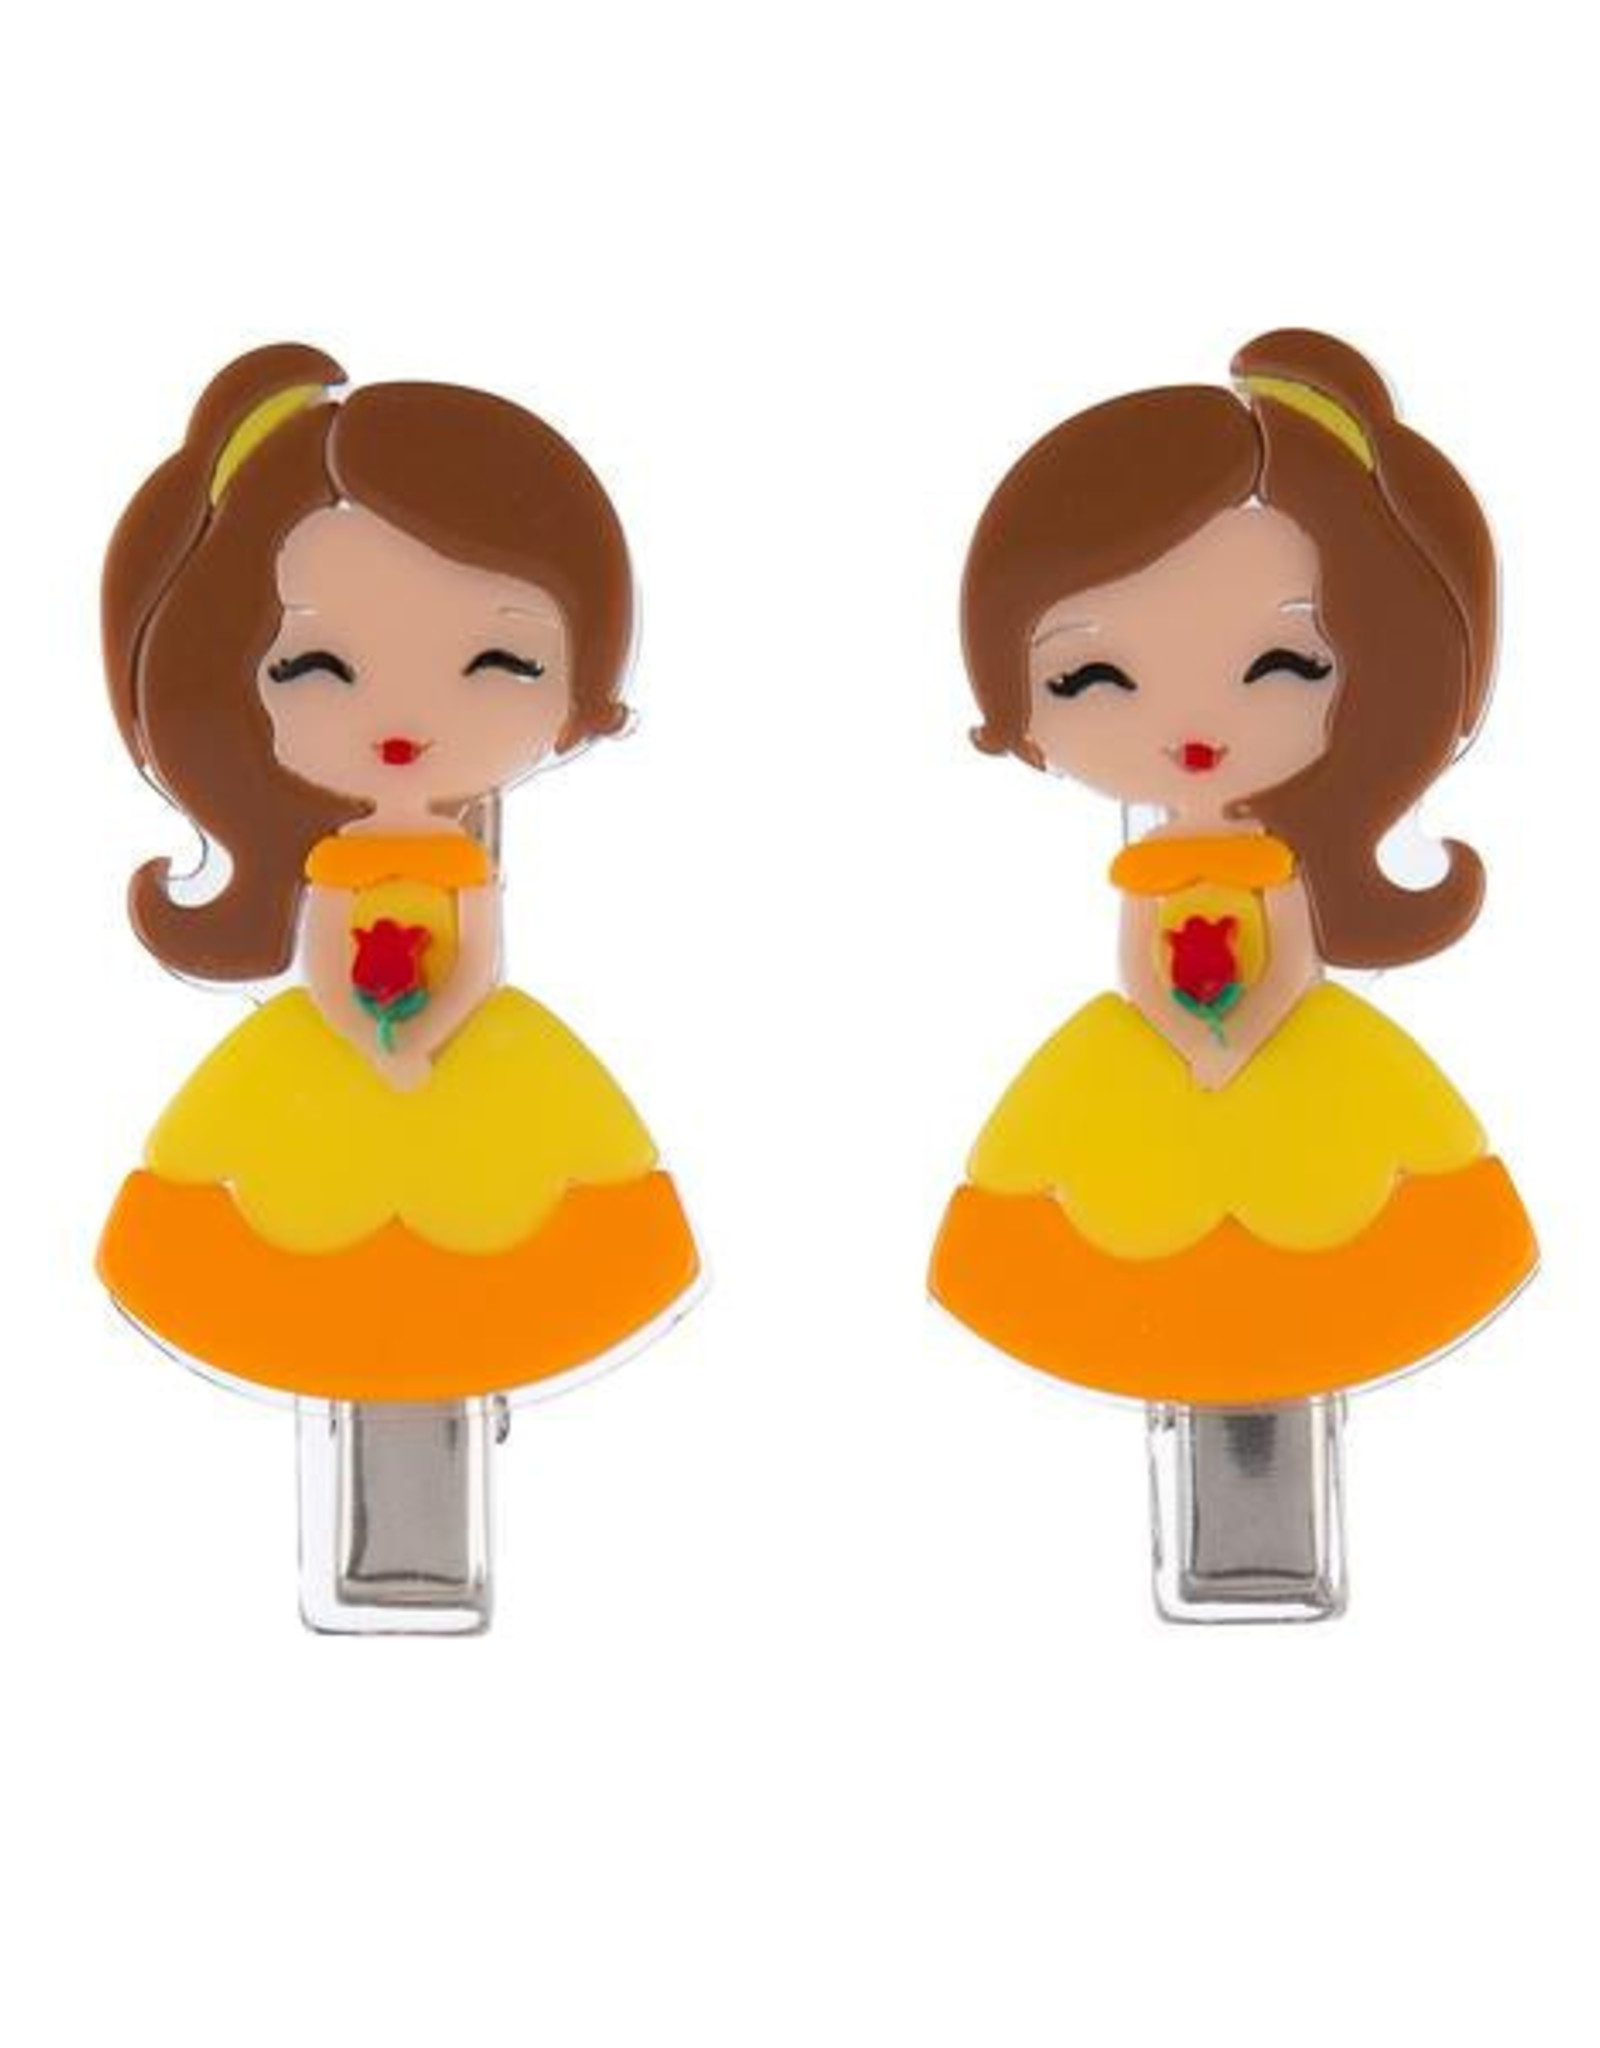 Lilies & Roses LR Alligator Clips Cute Doll Yellow Dress AC078-4